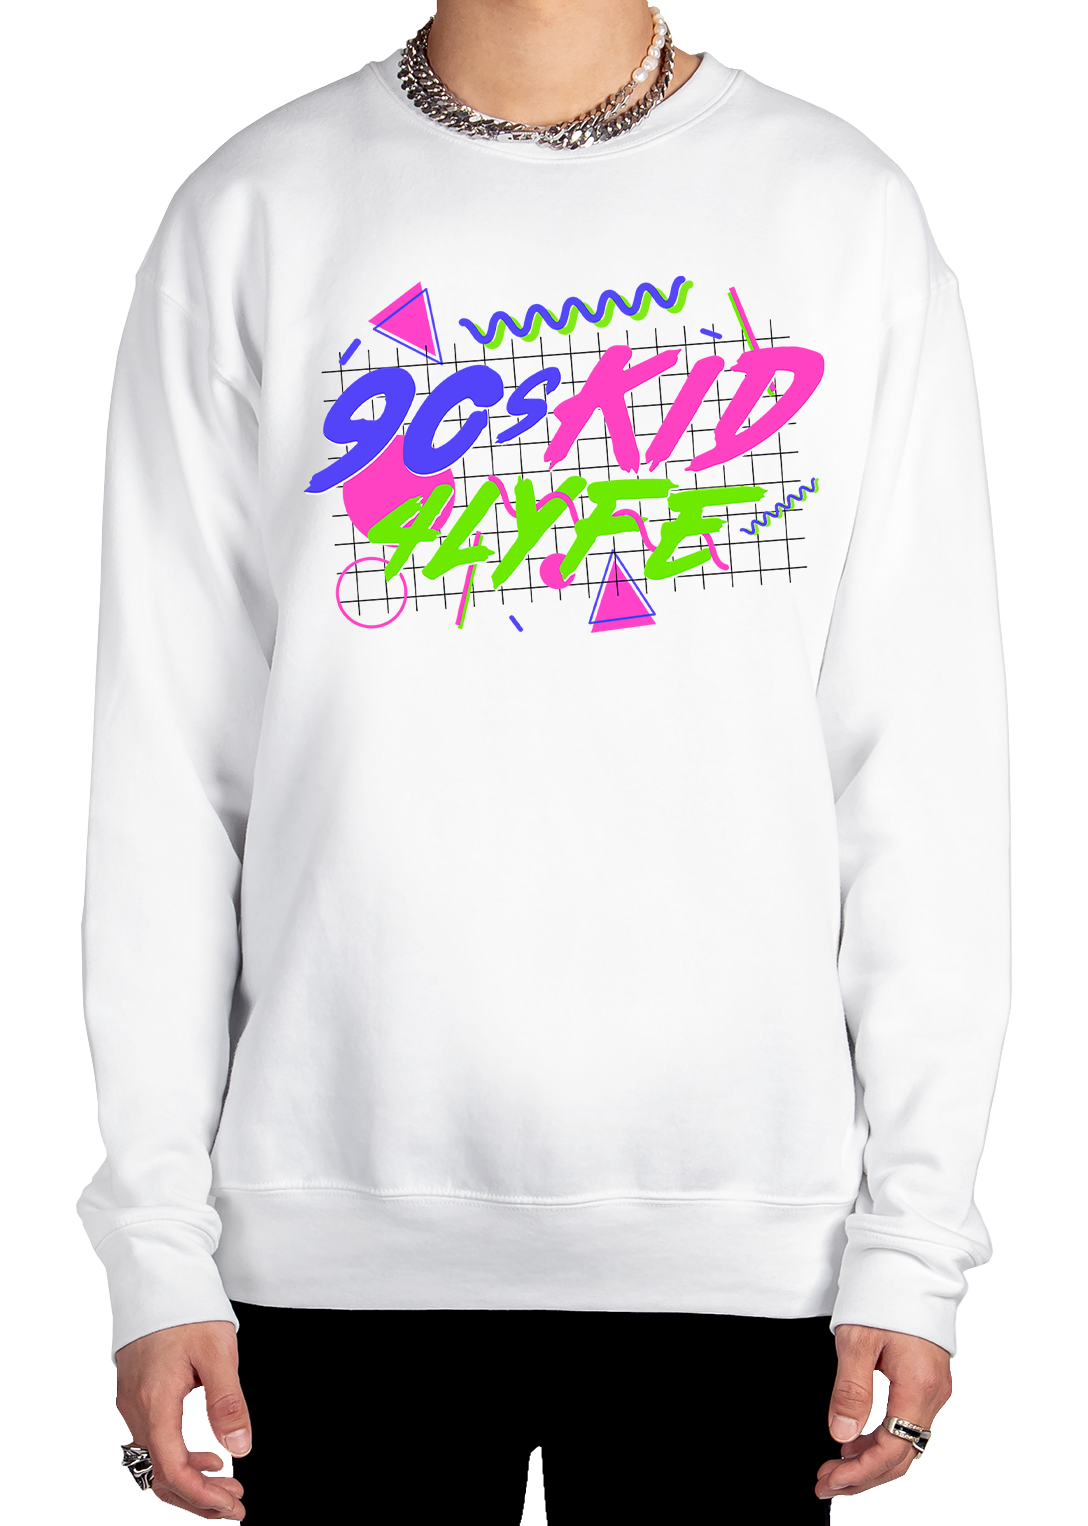 90sKid4Lyfe Sweatshirt